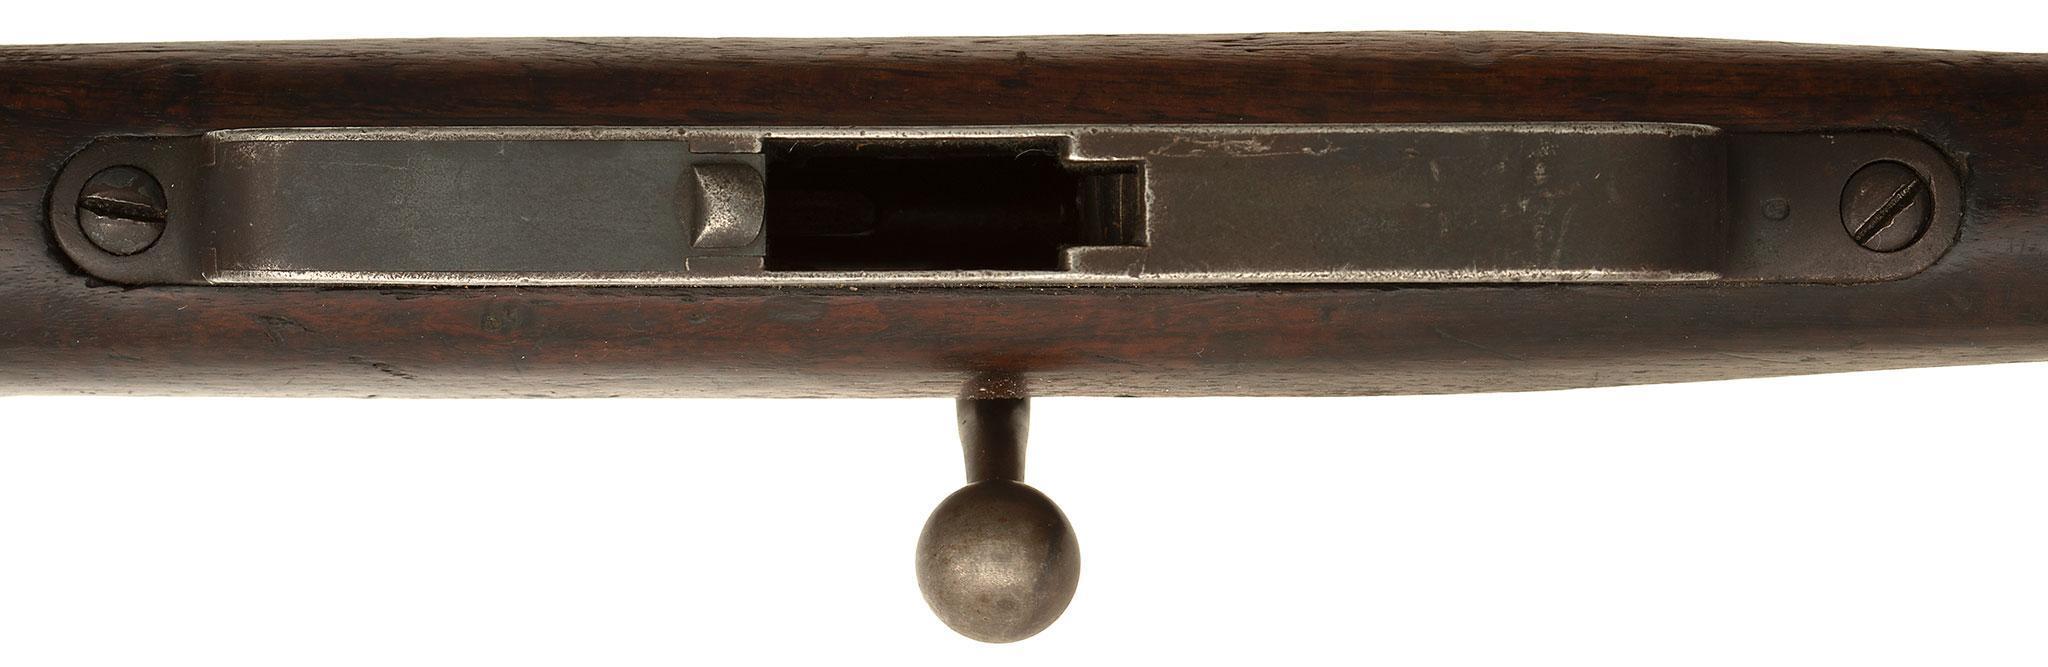 **M1891/1917 Italian Carcano Carbine